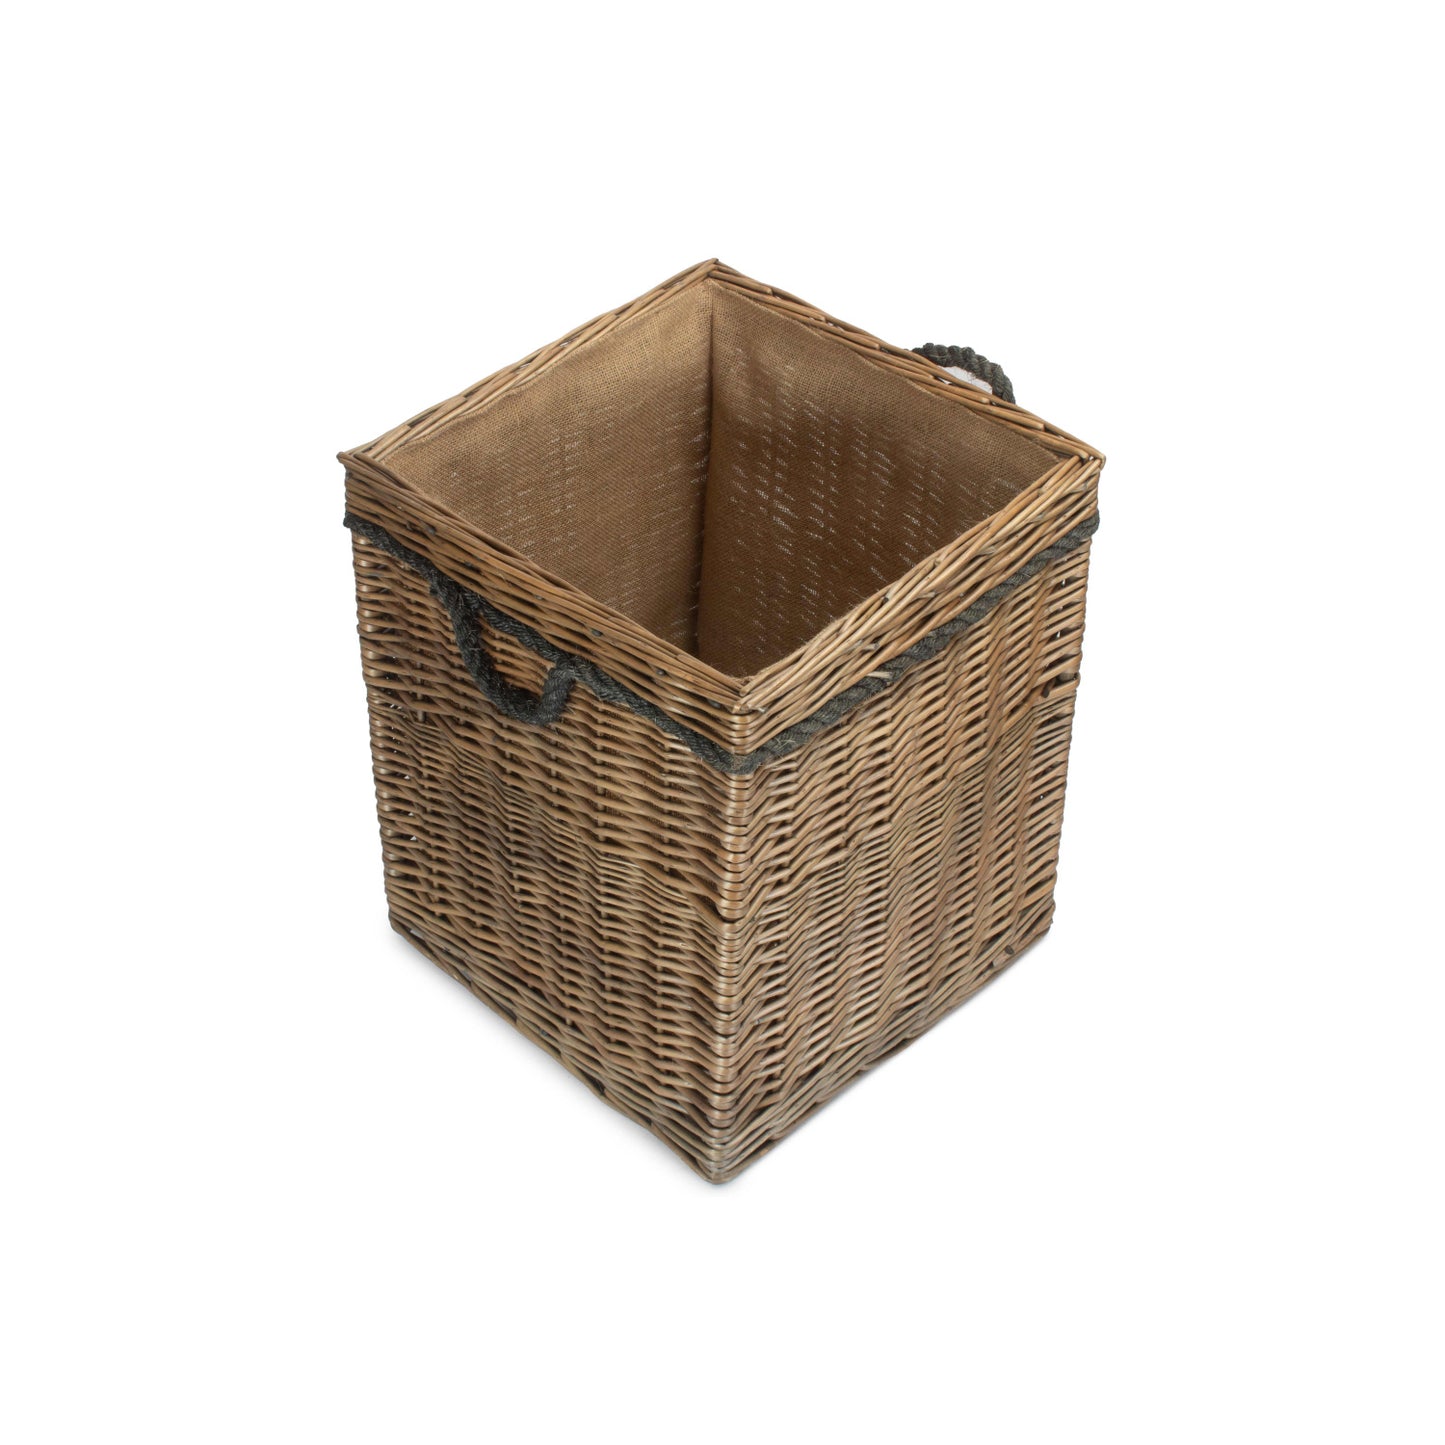 Size 2 Antique Wash Square Storage Basket